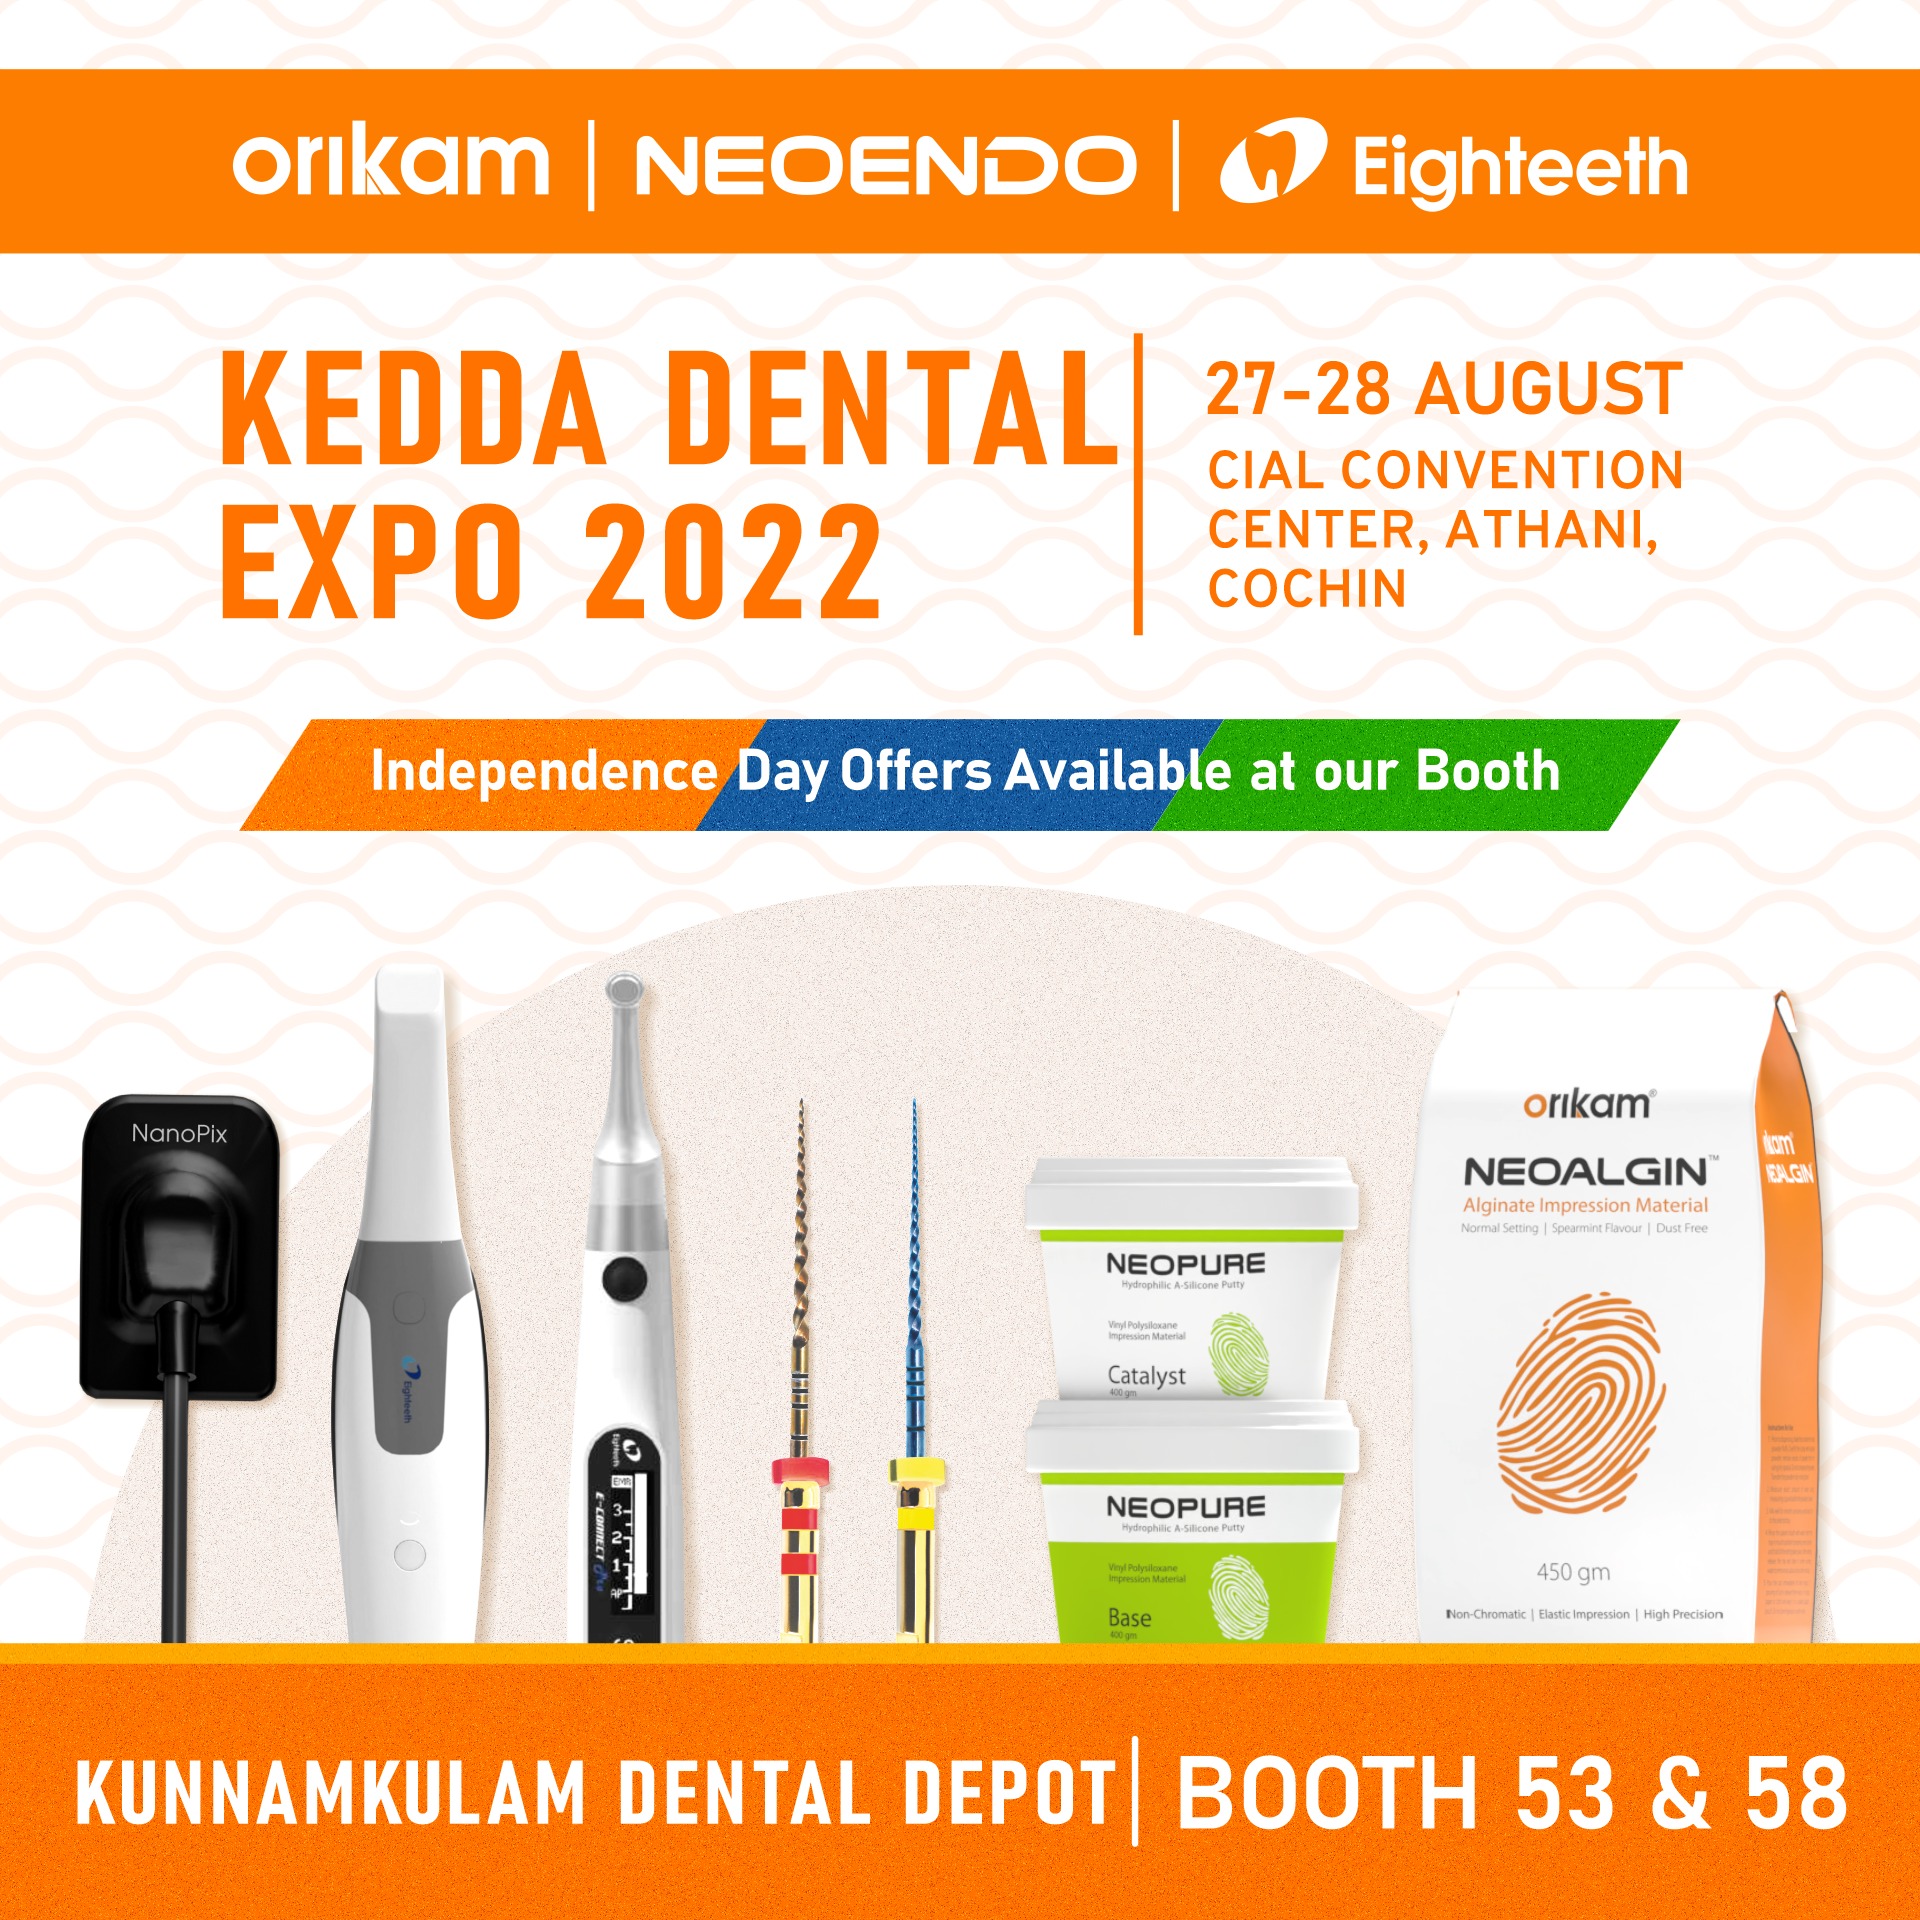 Kedda Dental Expo 2022